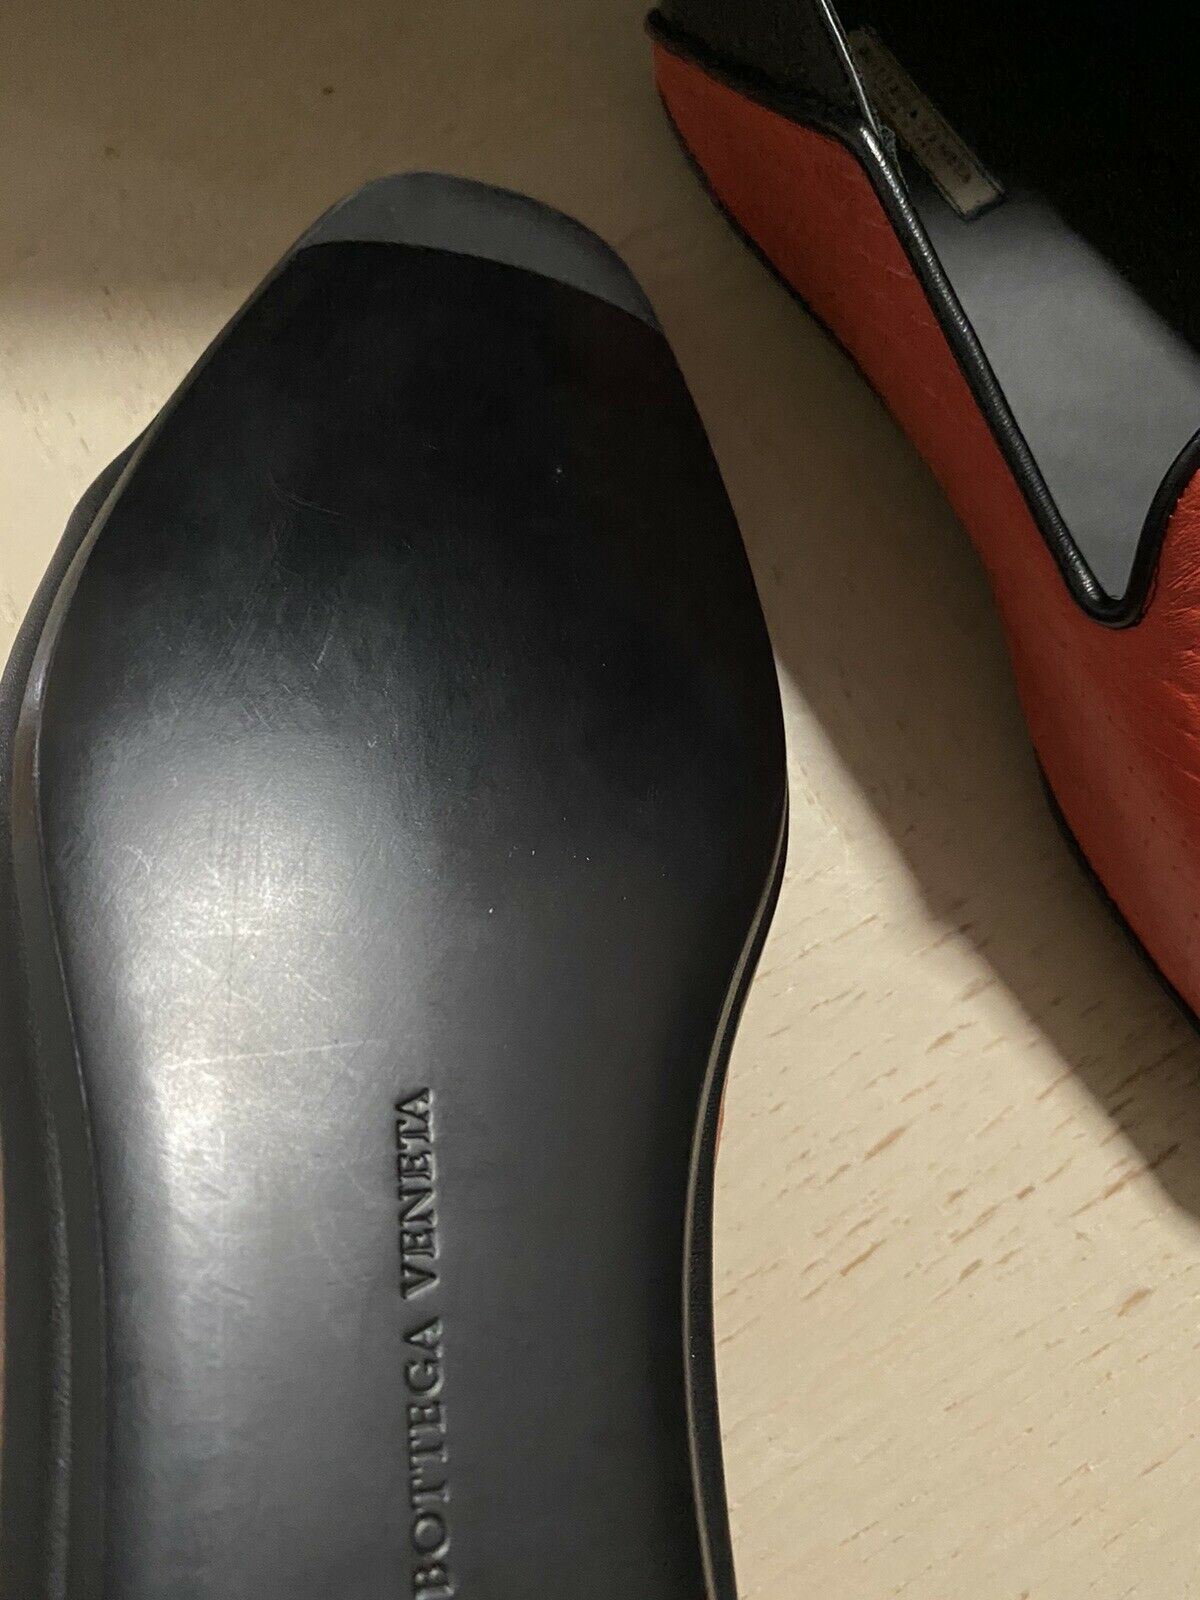 NIB $710 Bottega Veneta Men Leather Loafer/Sandal Shoes 4 Colors 8 US/41 Eu